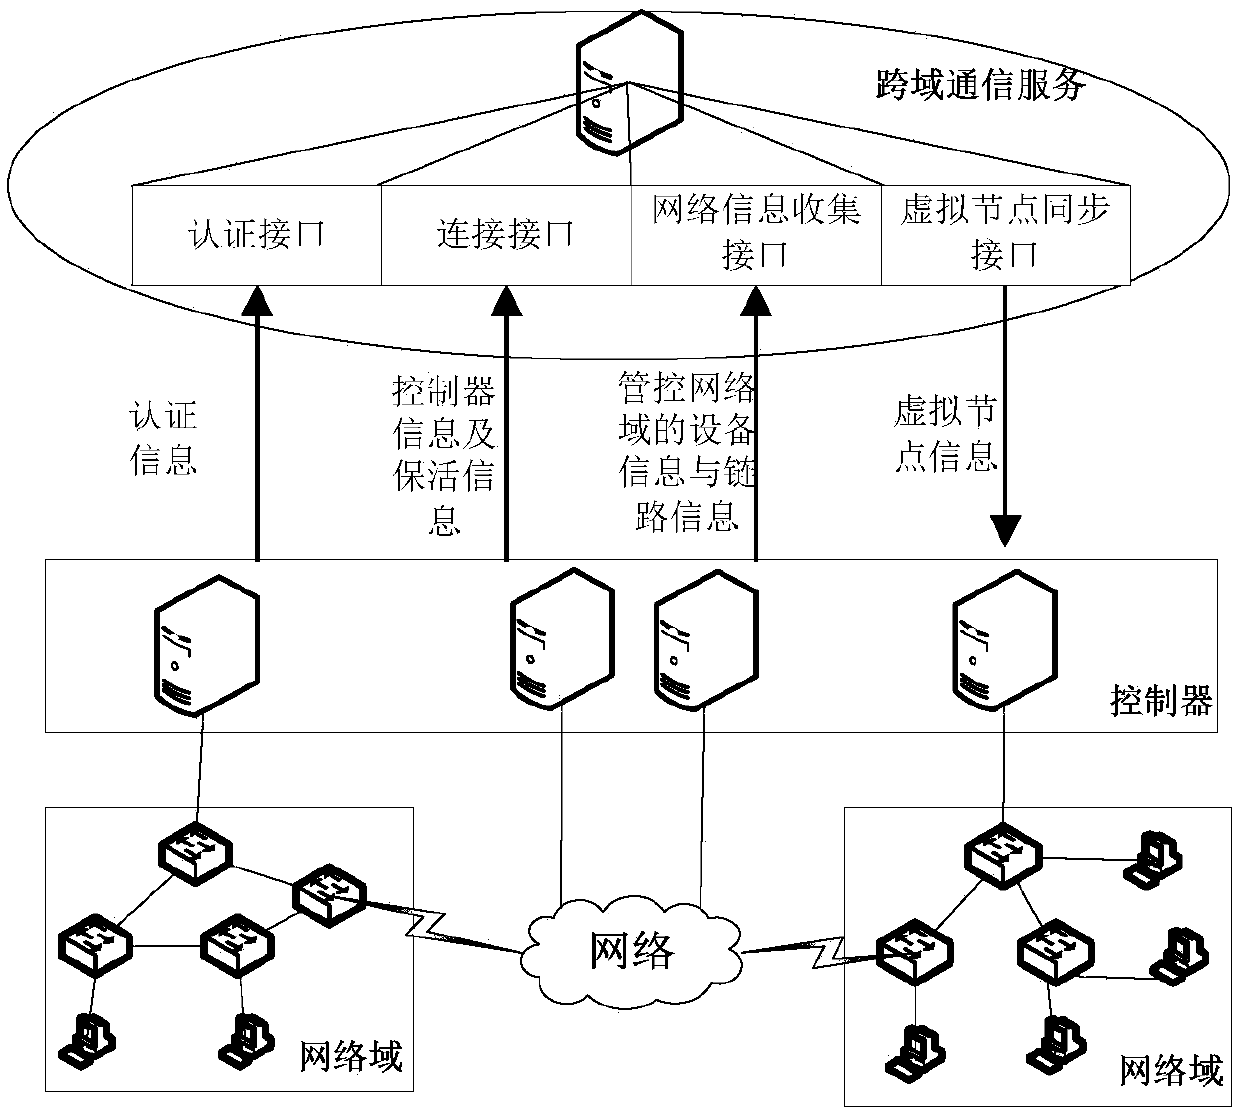 SDN network cross-domain communication method based on virtual node technology